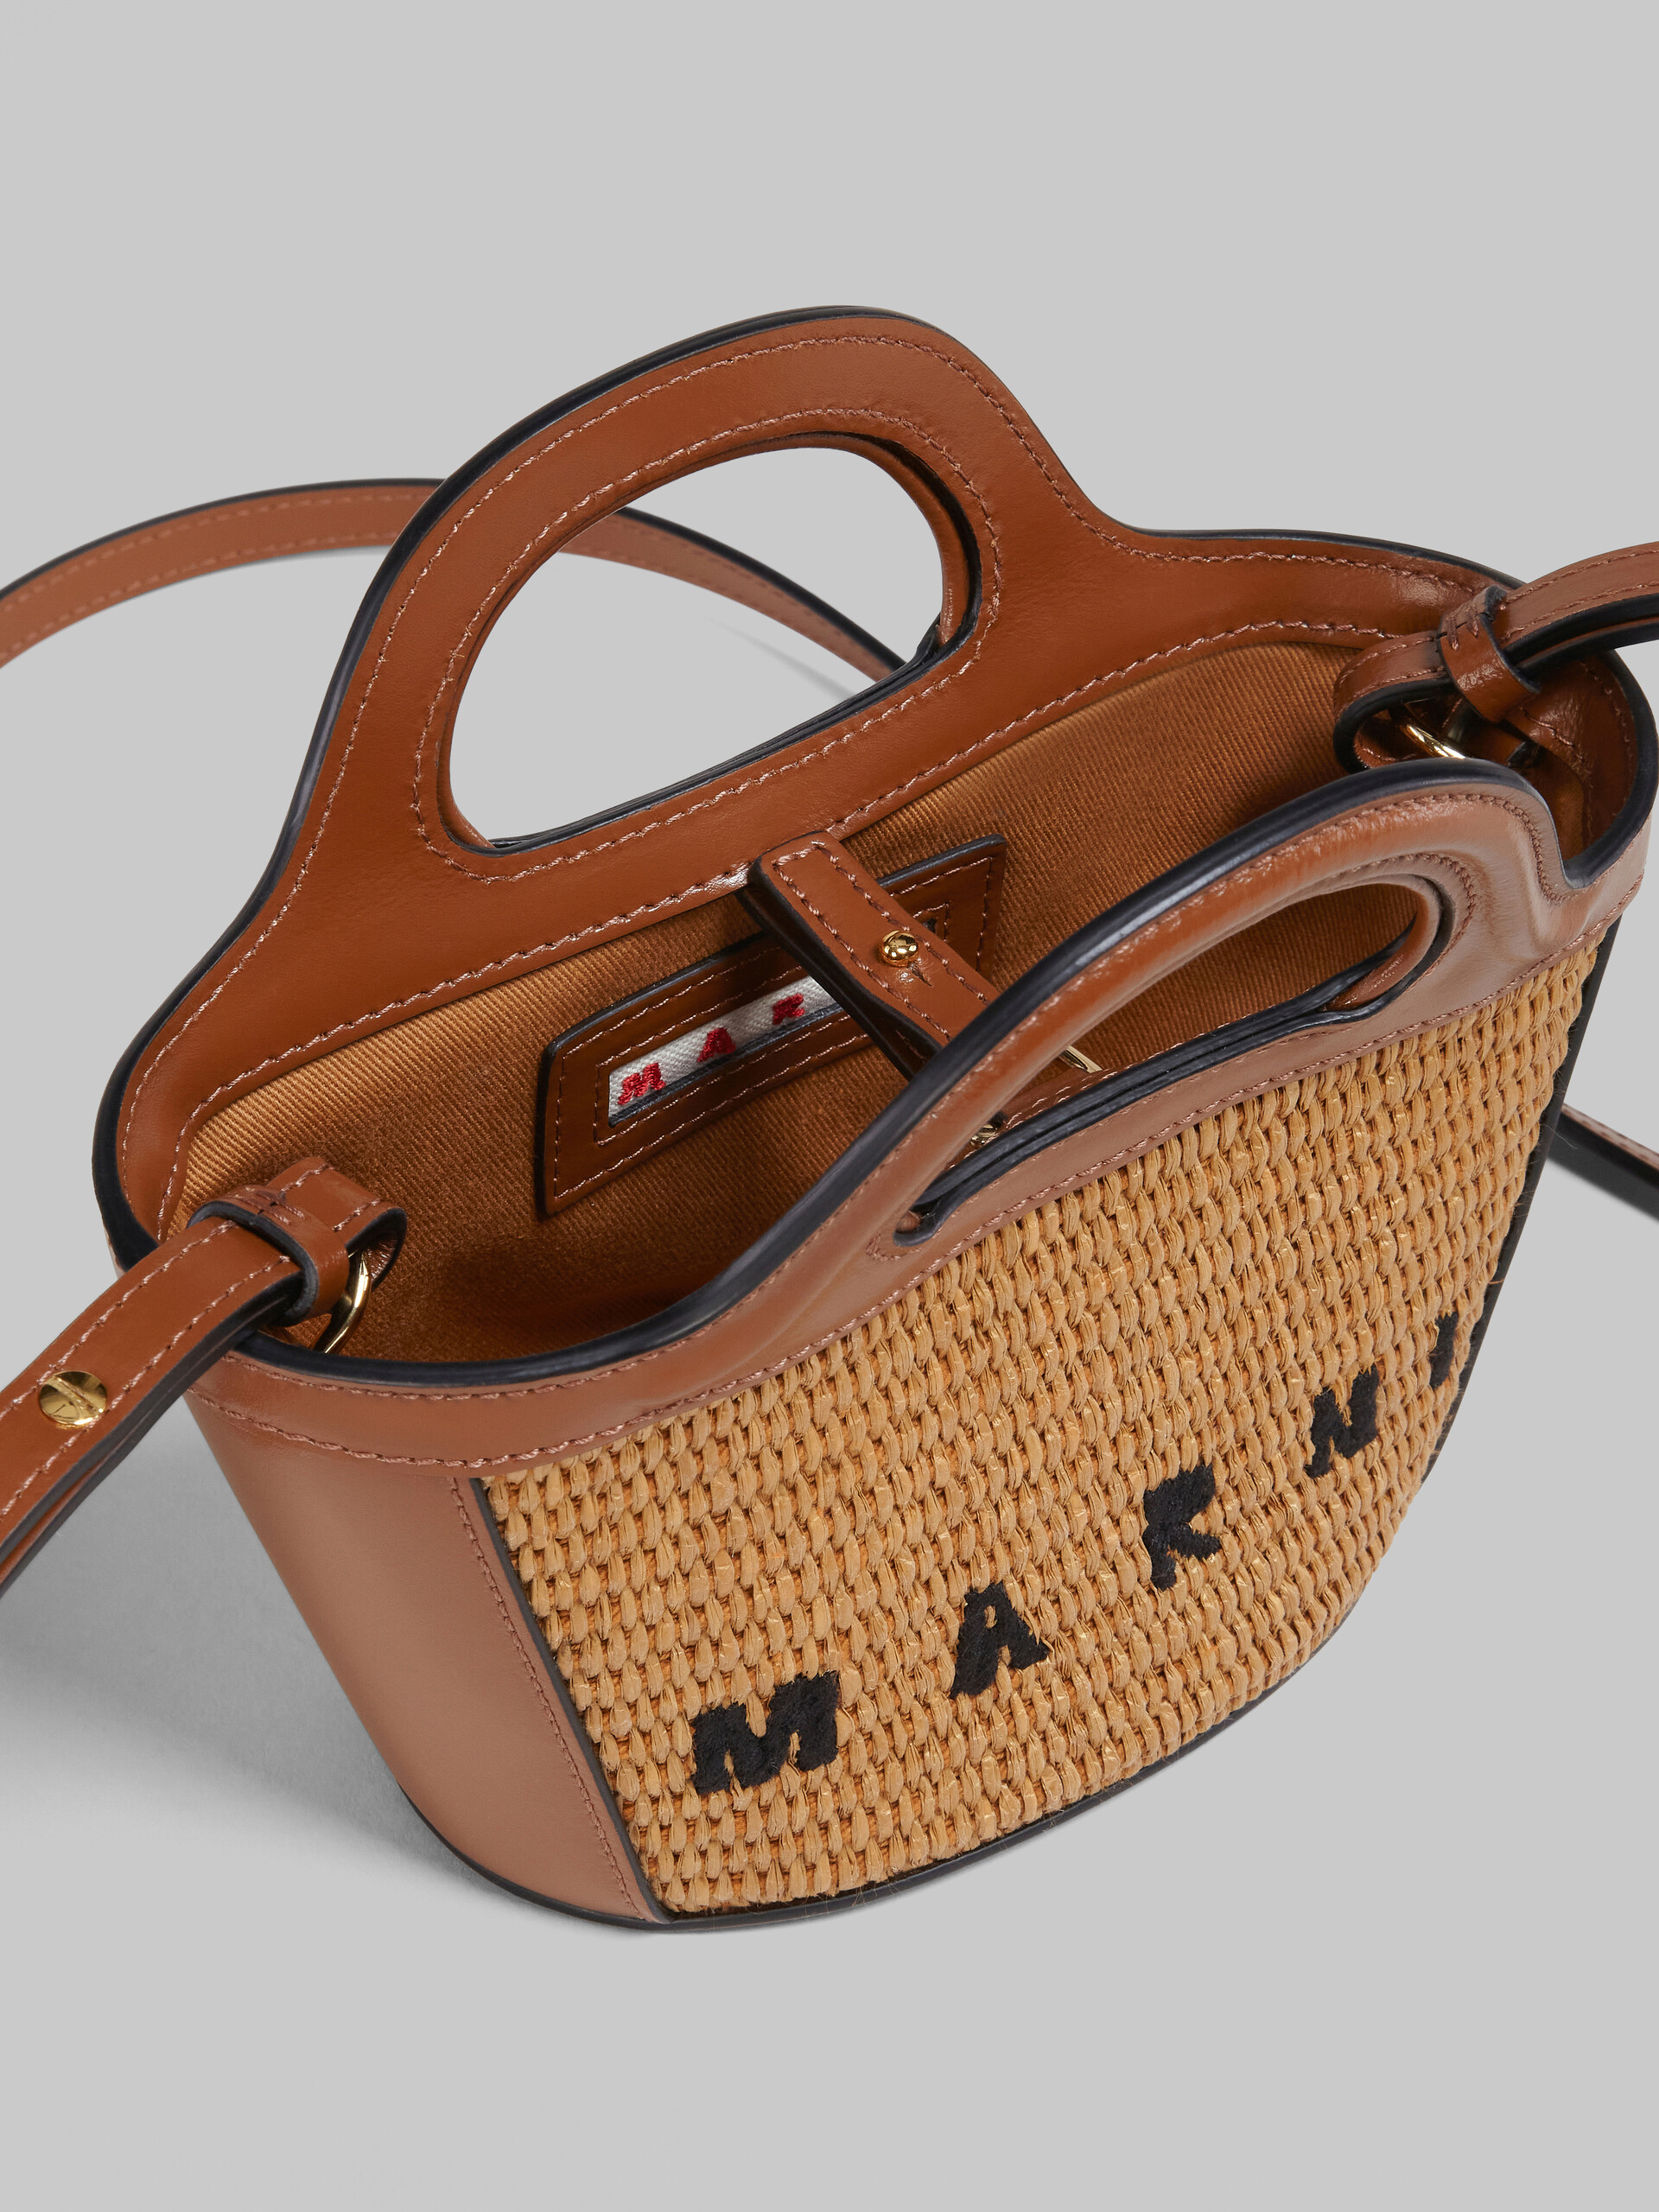 Tropicalia Micro Bag in brown leather and raffia-effect fabric